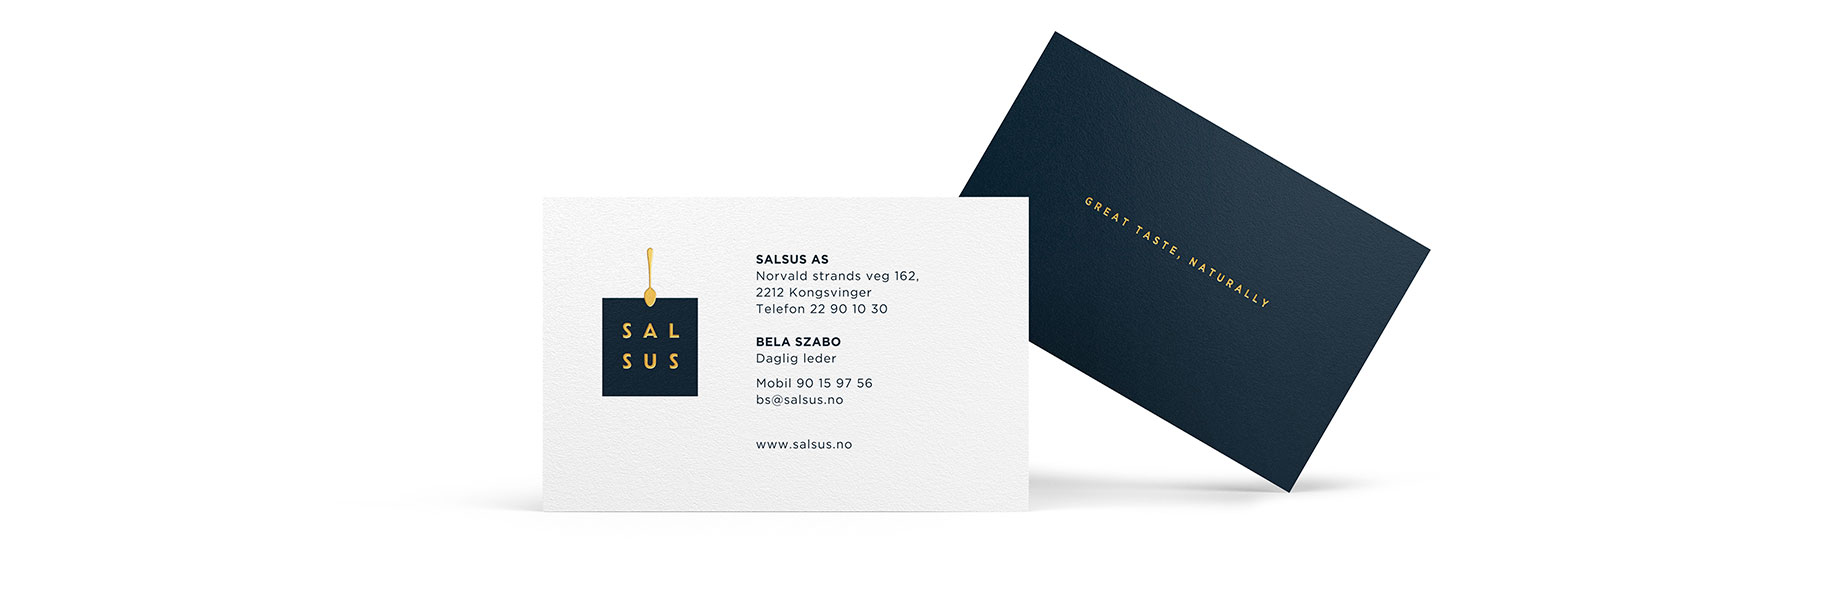 Salsus broth Kraft visittkort business card. Visuell identitet visual identity.